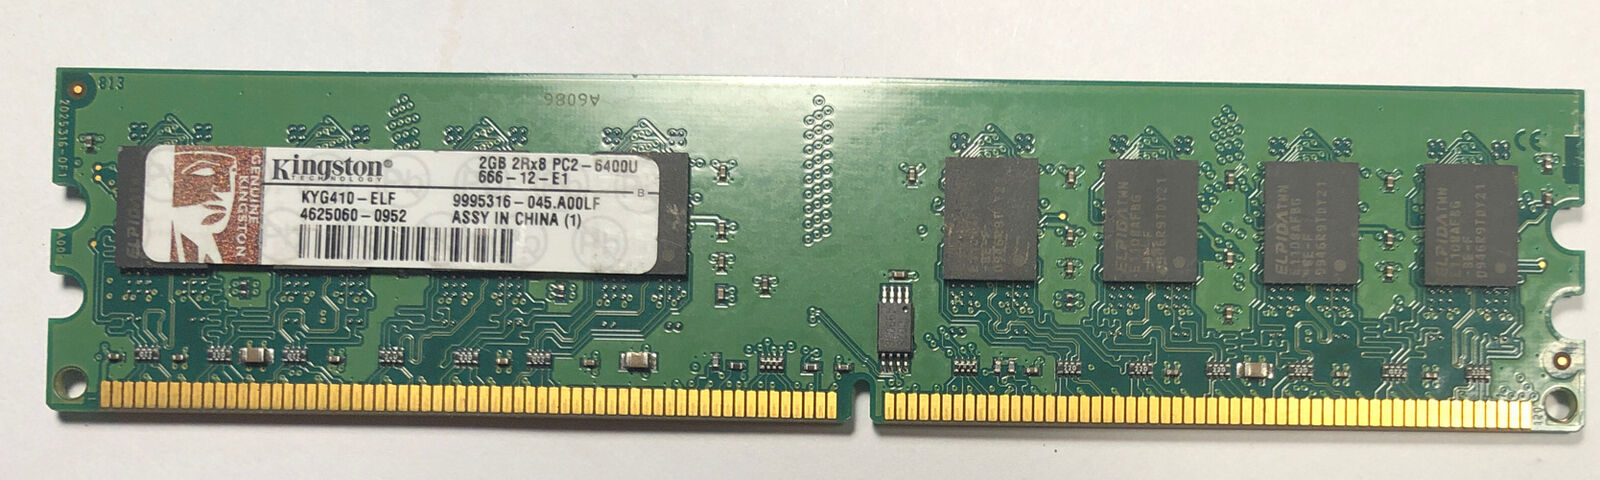 Kingston 2GB 2Rx8 PC2-6400U RAM (KYG410-ELF) Tested